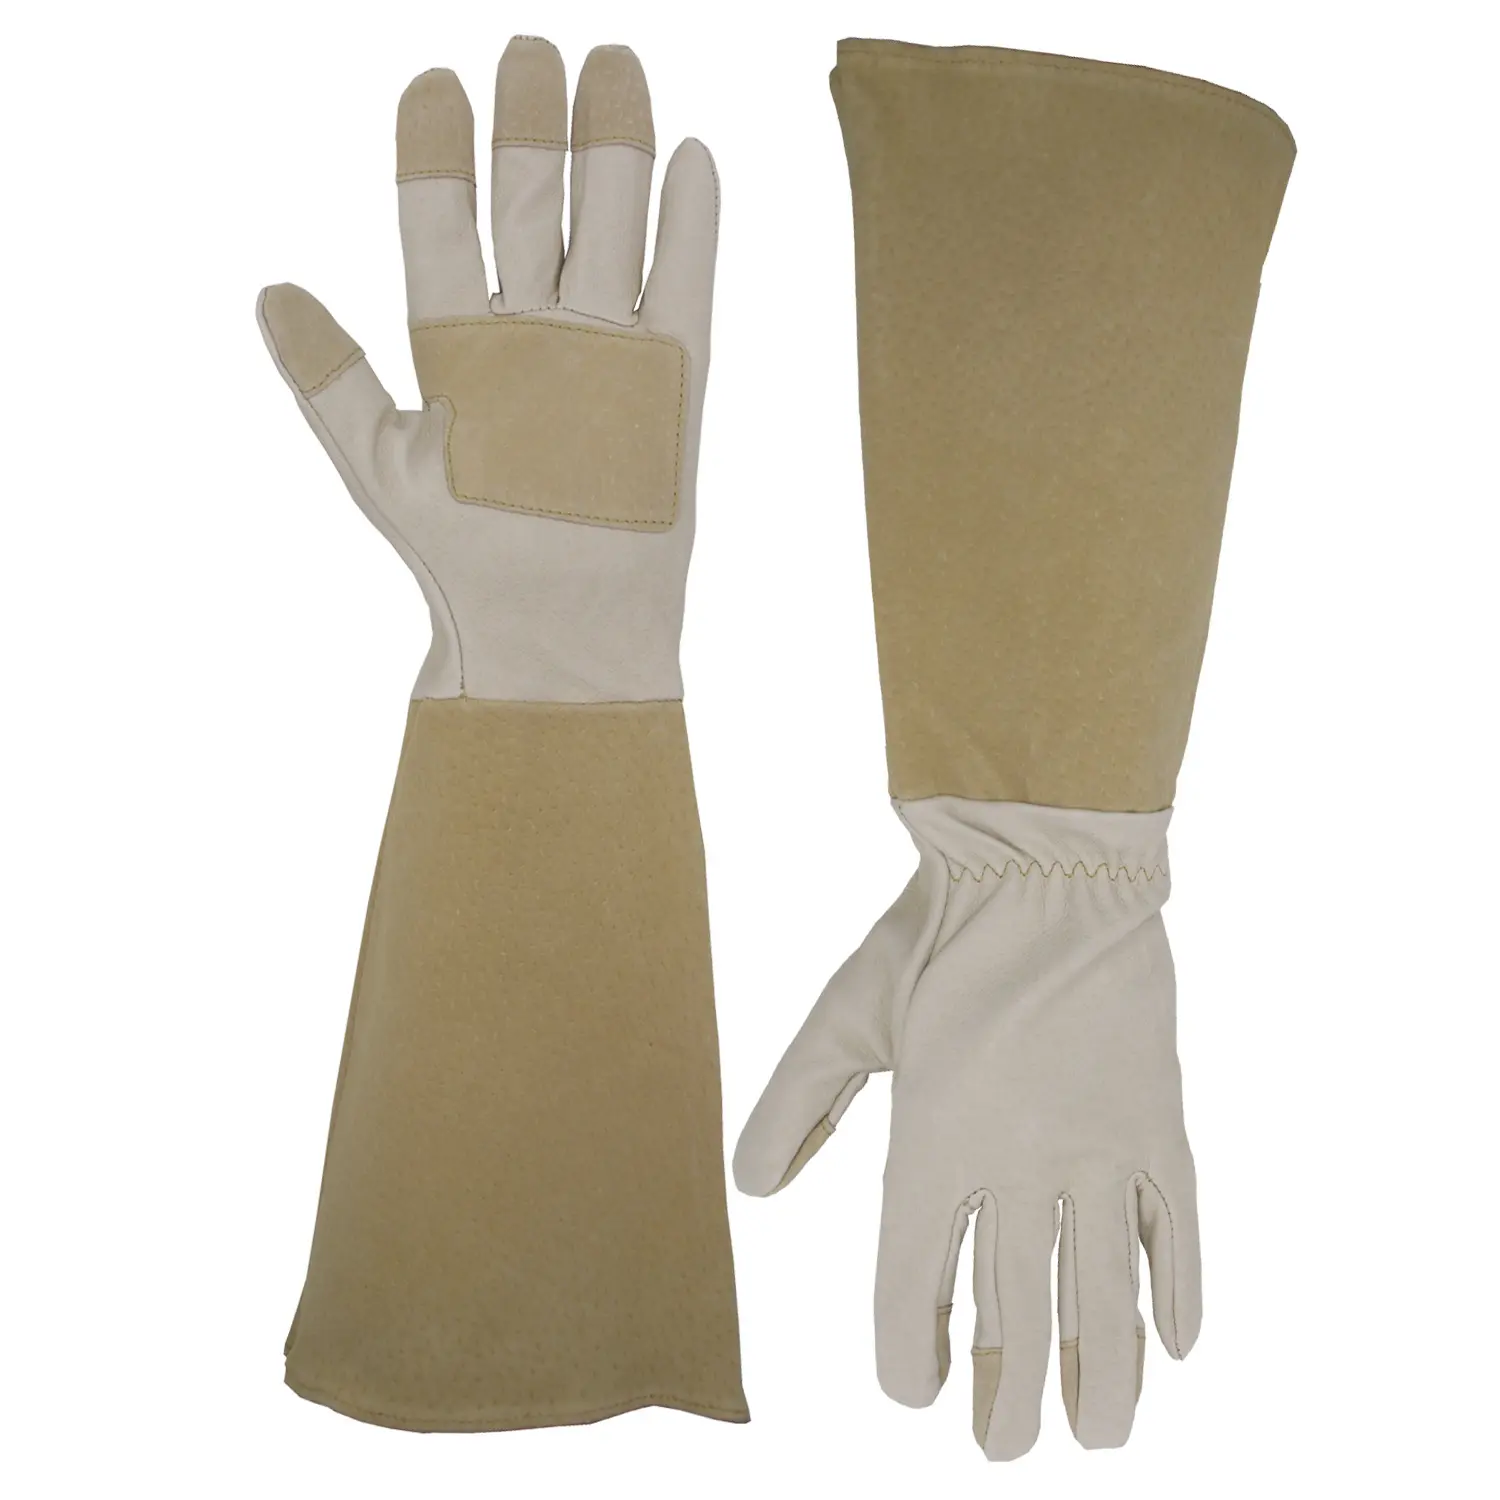 Resistance Cut Gloves HANDLANDY Cut Resistant Gloves EN388 Long Cuff Protect Wrist Pigskin Leather Household Garden Gloves